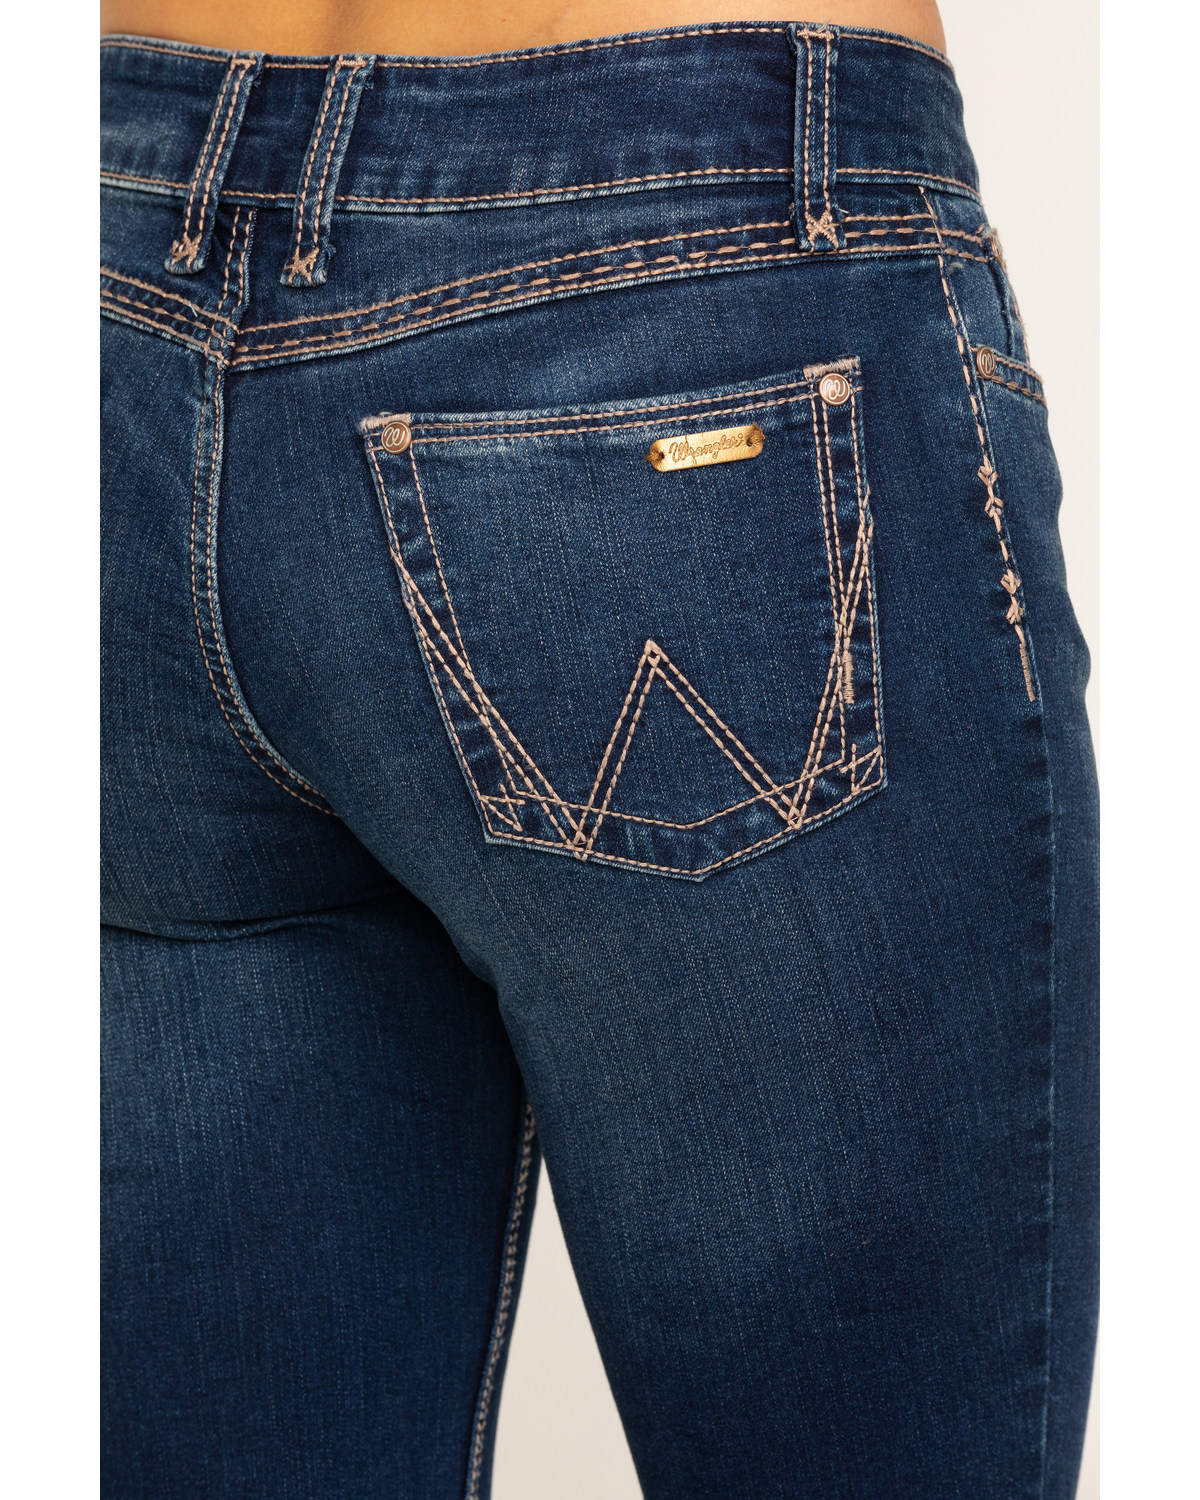 Wrangler Women's Dark Wash Retro Mae Jeans Indigo 9W x 34L - image 5 of 7